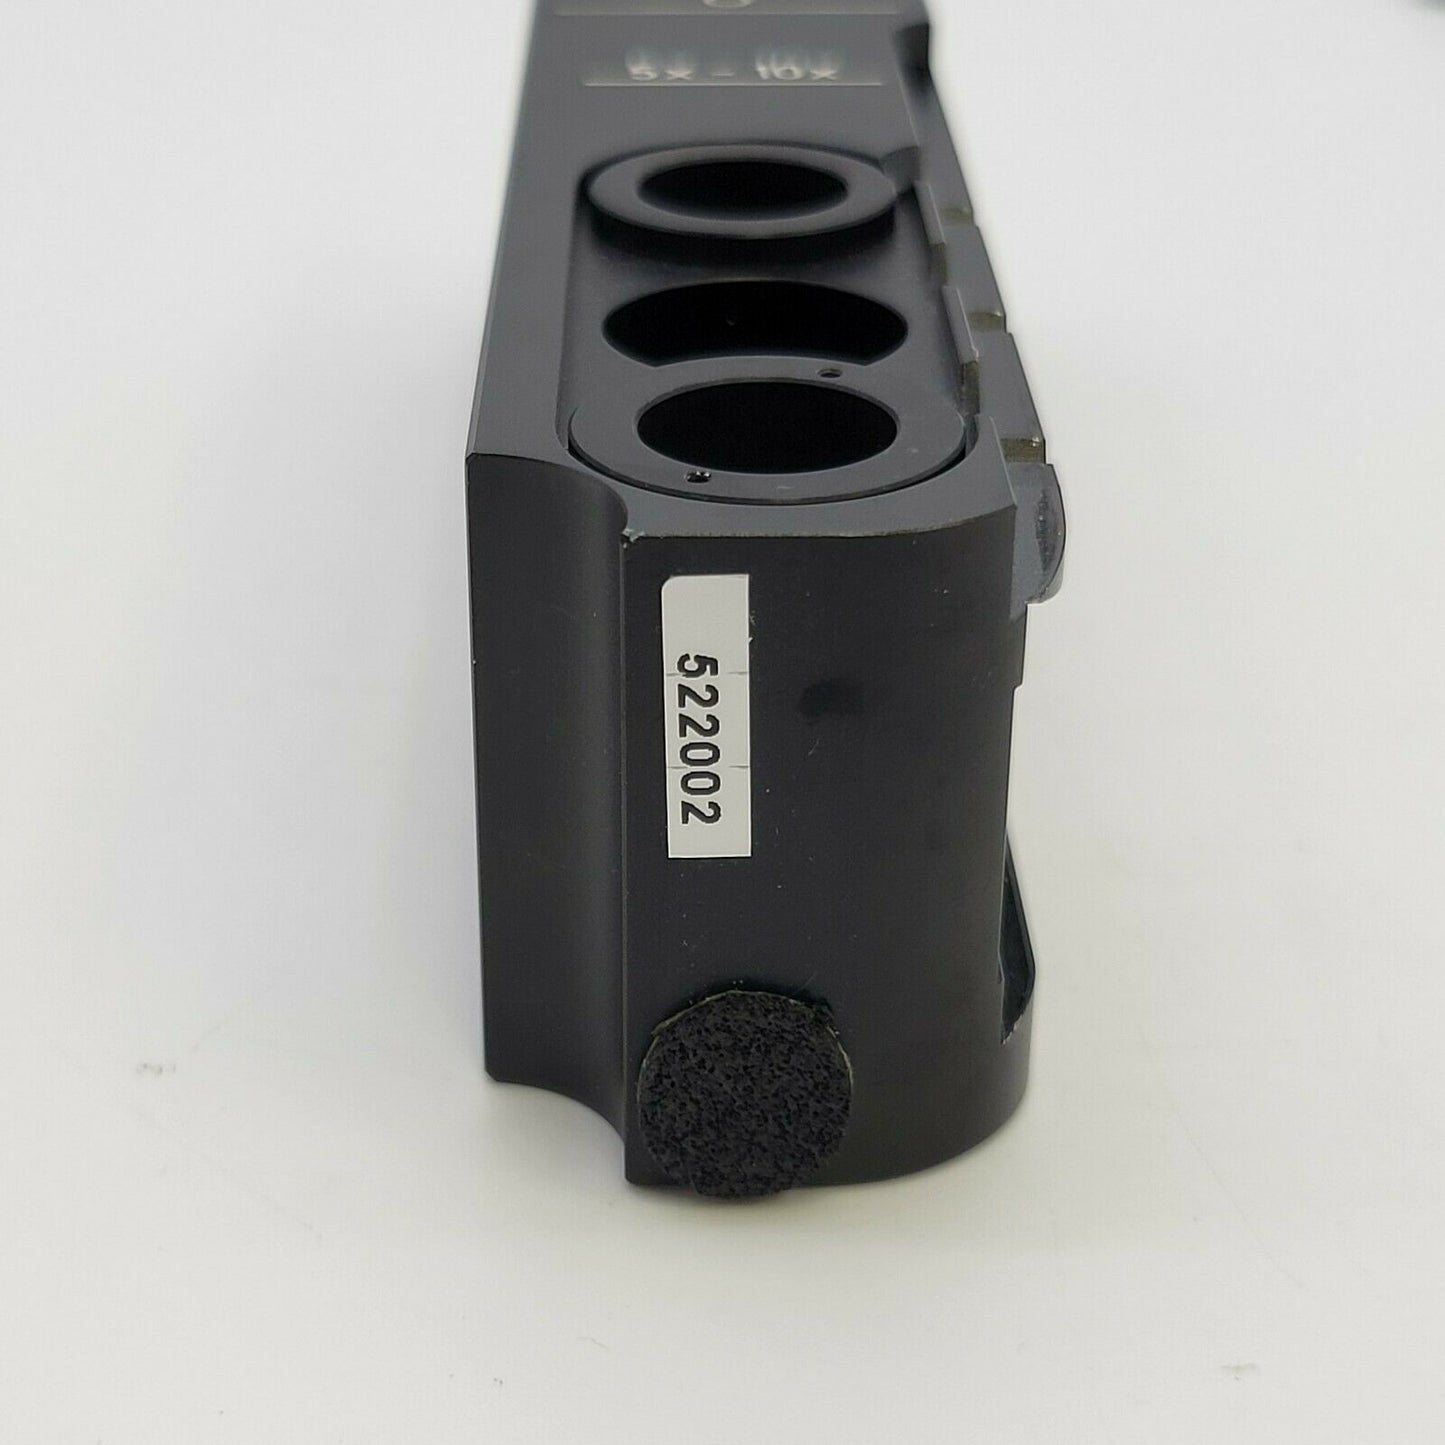 Leica Microscope I3 Phaco Phase Contrast Slider 522002 - microscopemarketplace